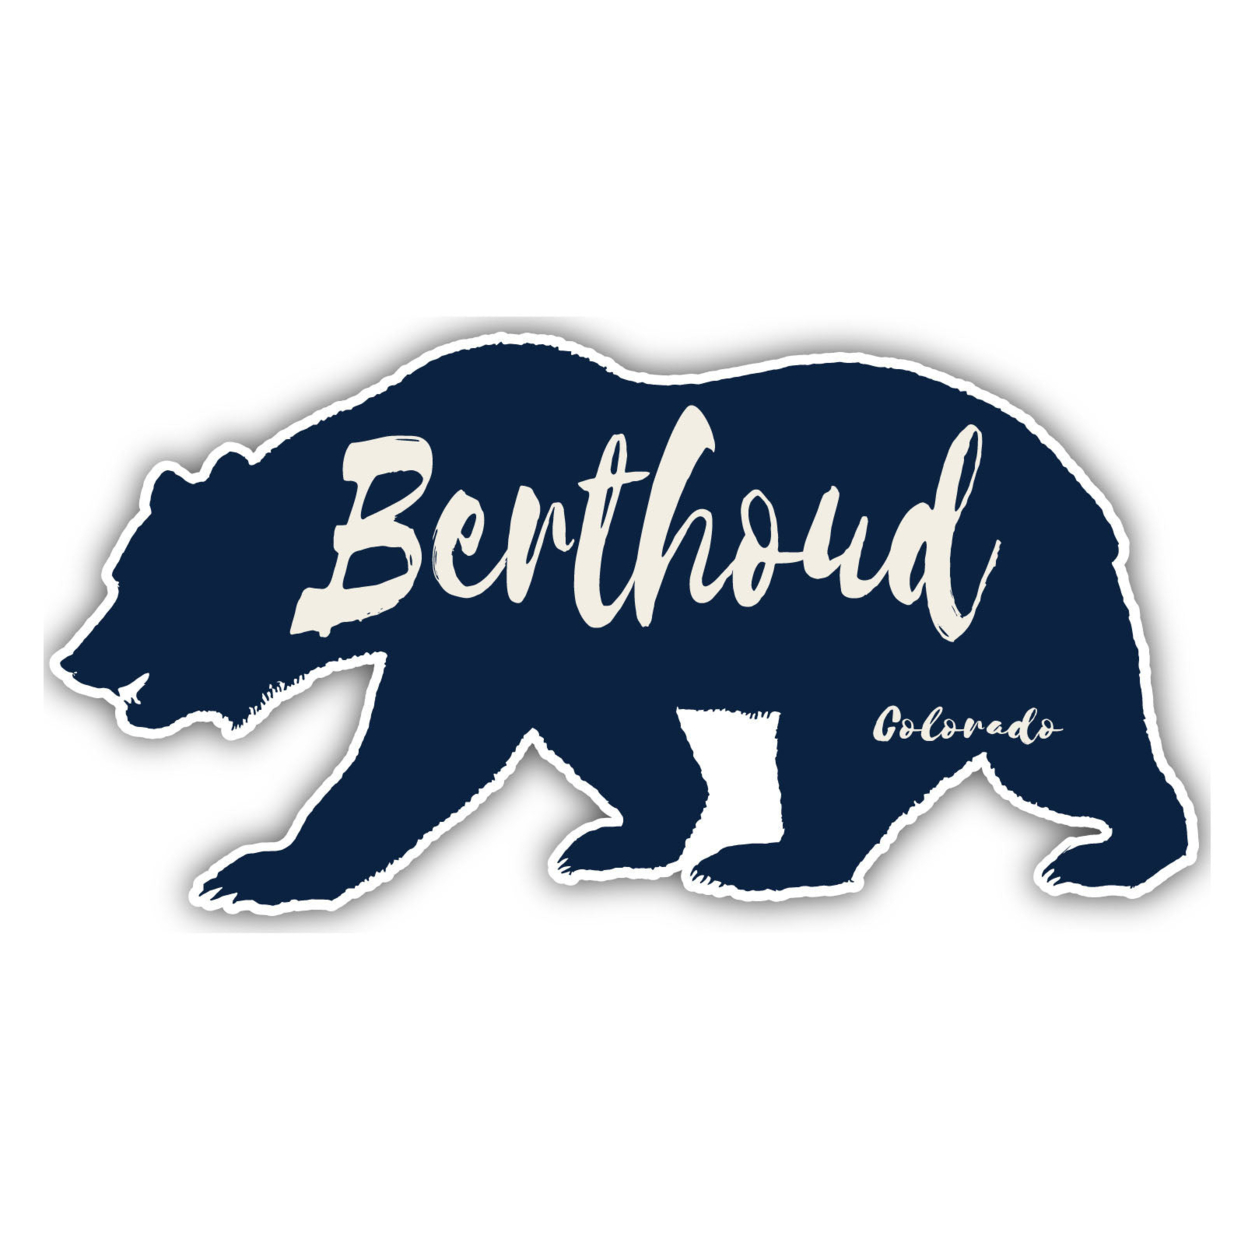 Berthoud Colorado Souvenir Decorative Stickers (Choose Theme And Size) - Single Unit, 12-Inch, Tent